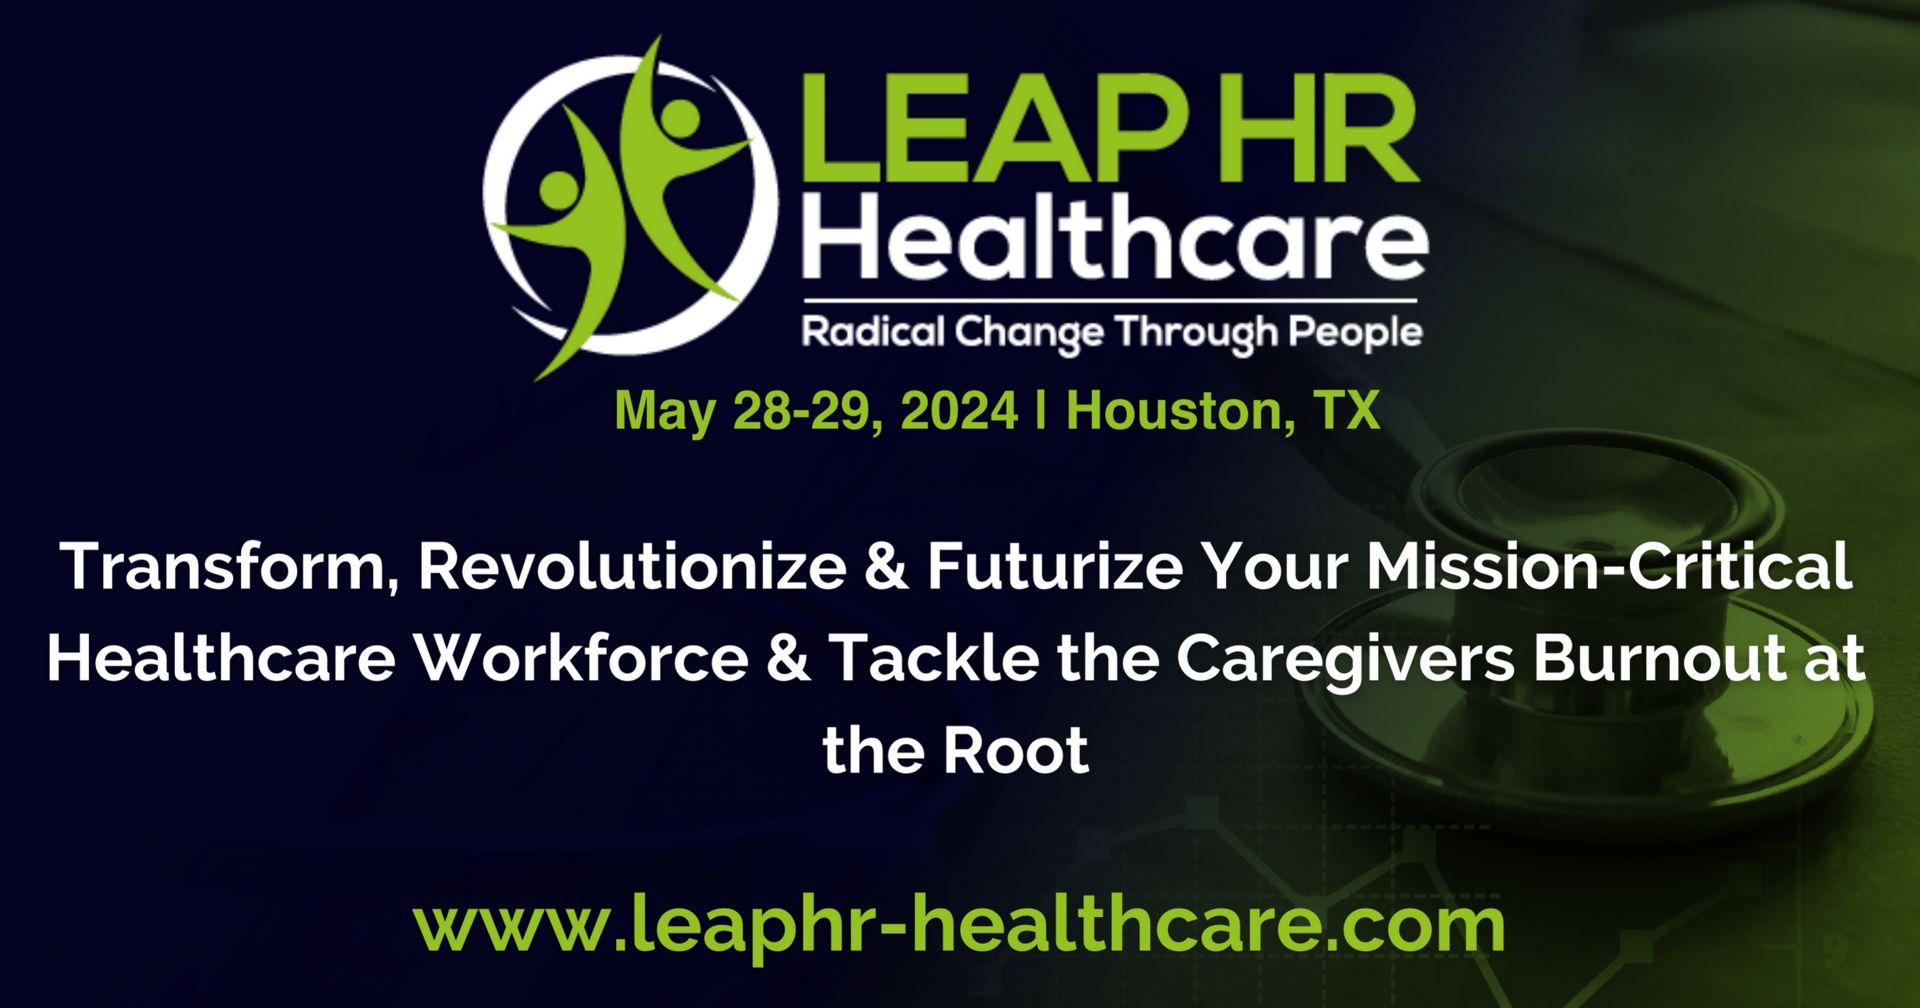 LEAP HR: Healthcare 2024, Houston, Texas, United States